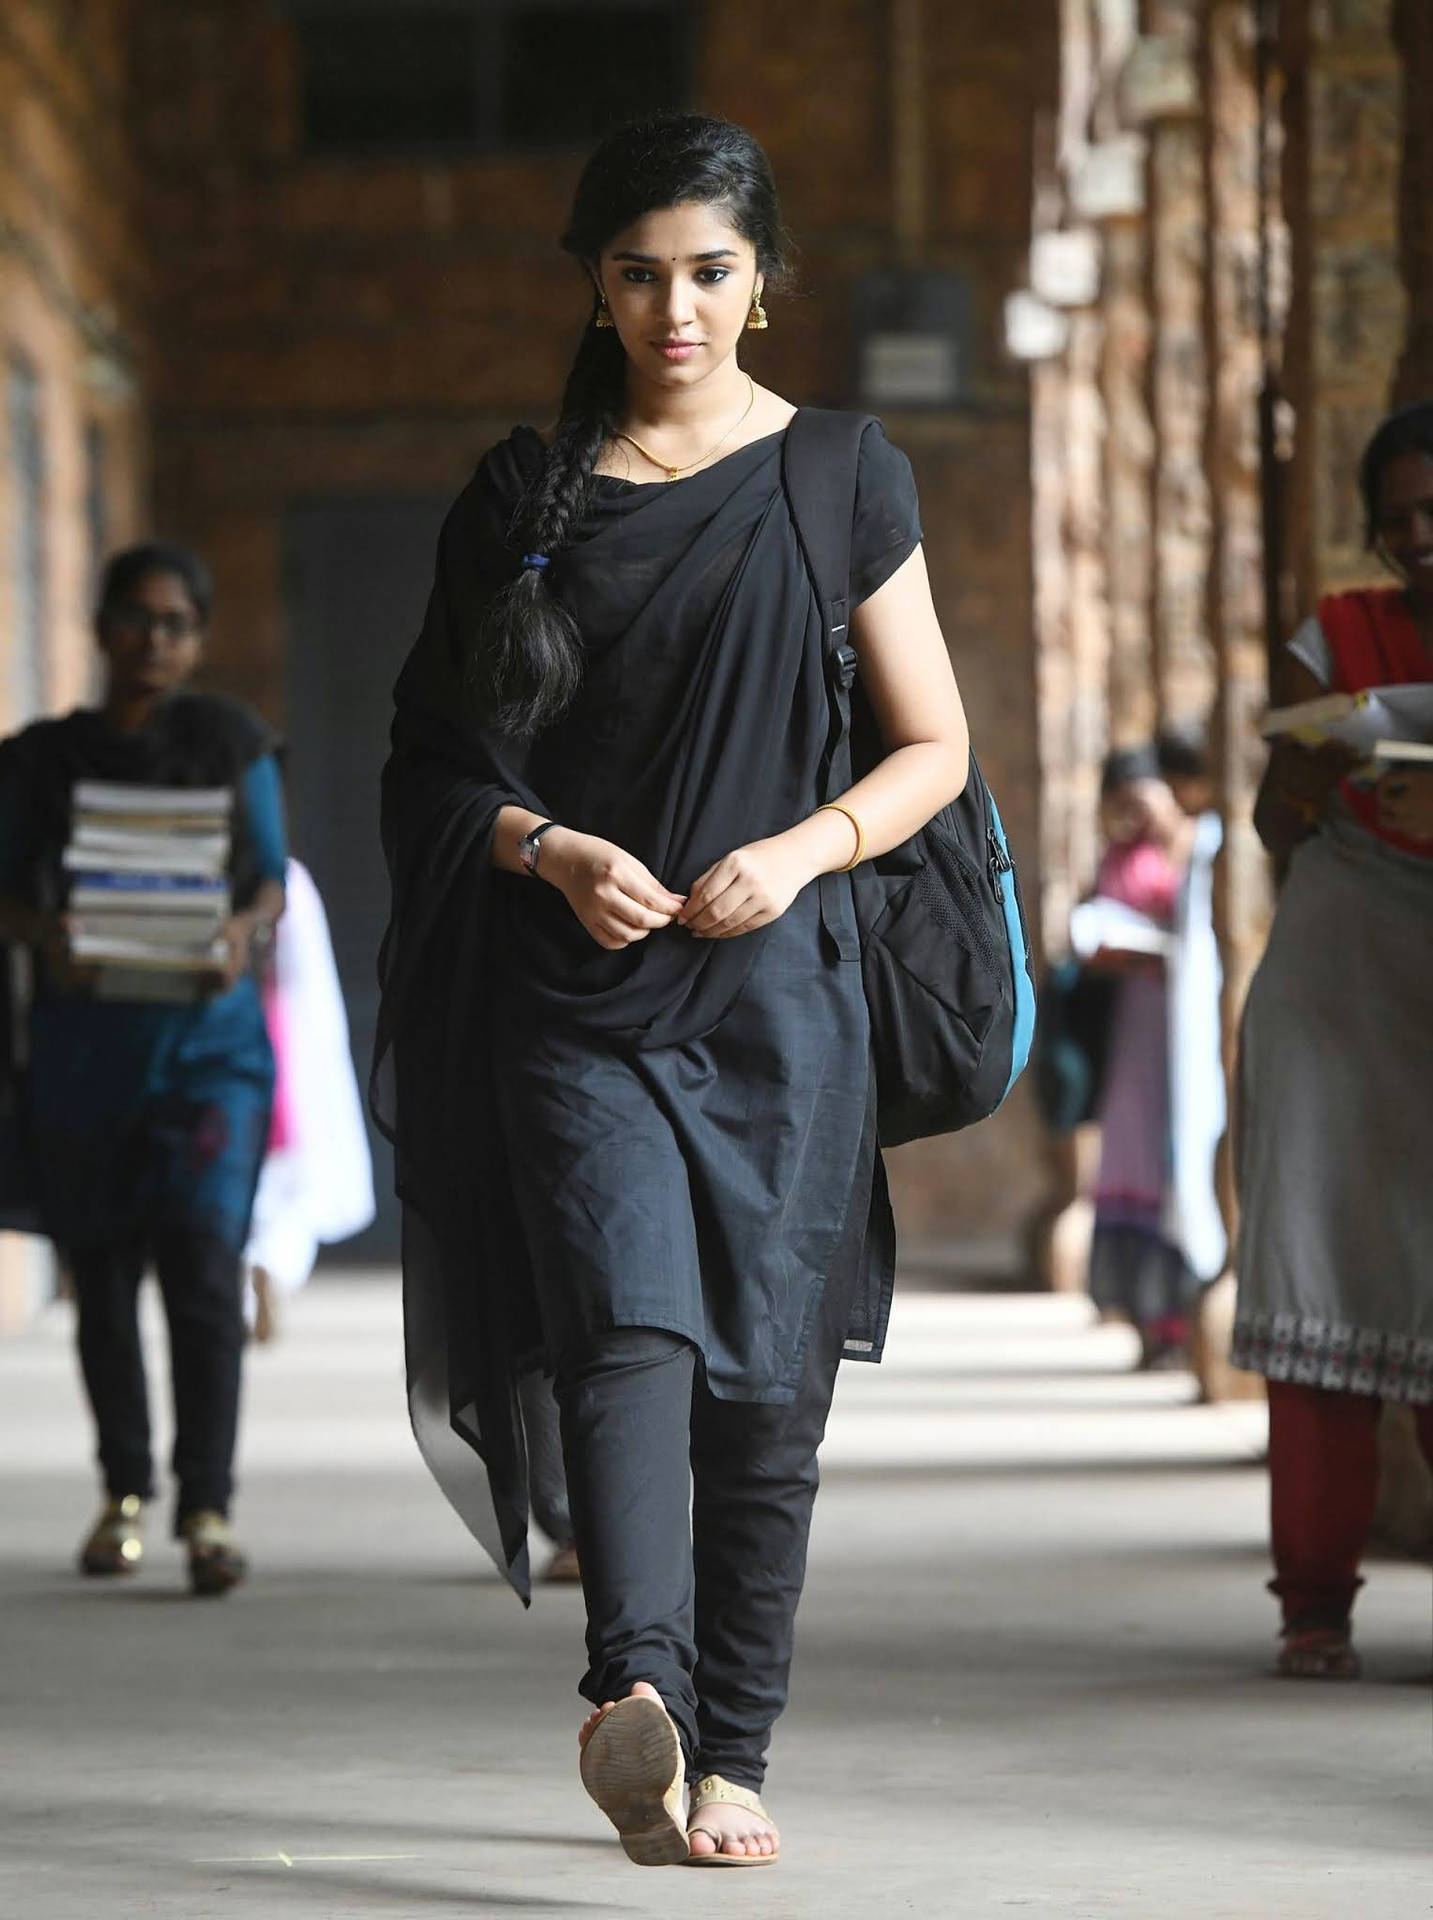 Uppena College Student Sangeetha